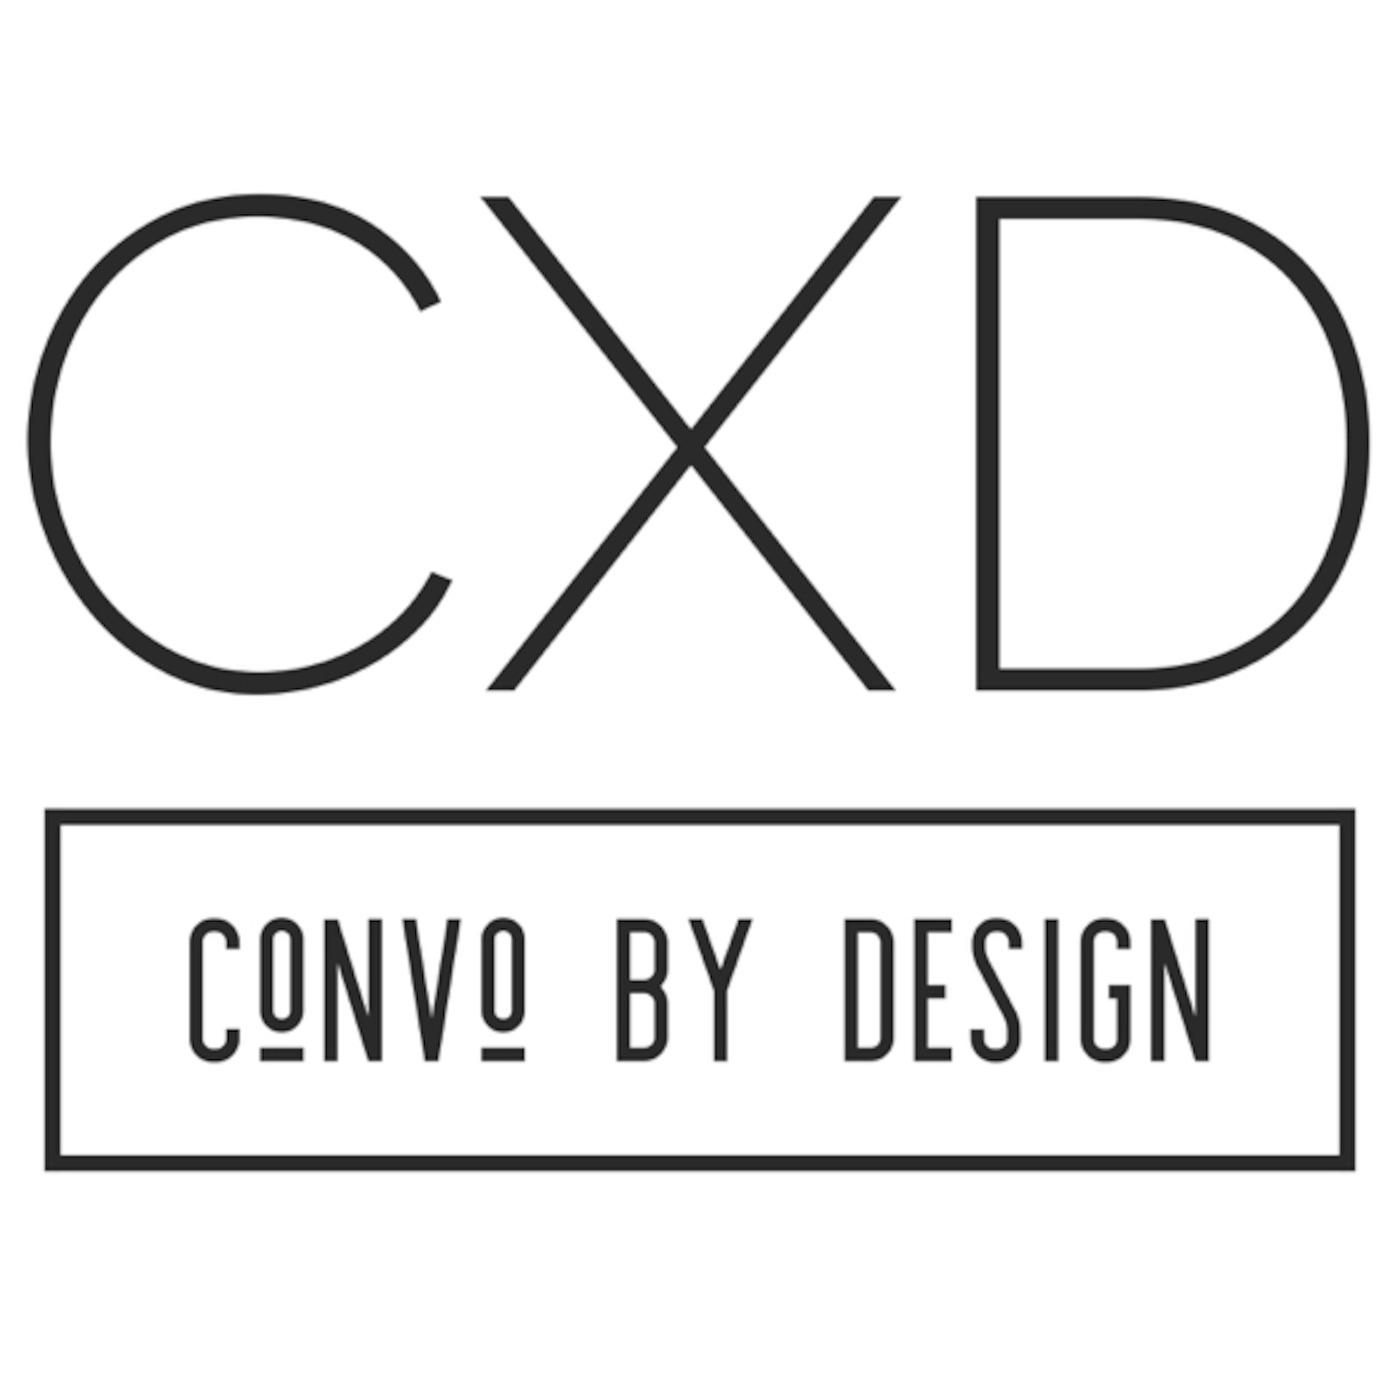 Convo by design with interior designer lori dennis